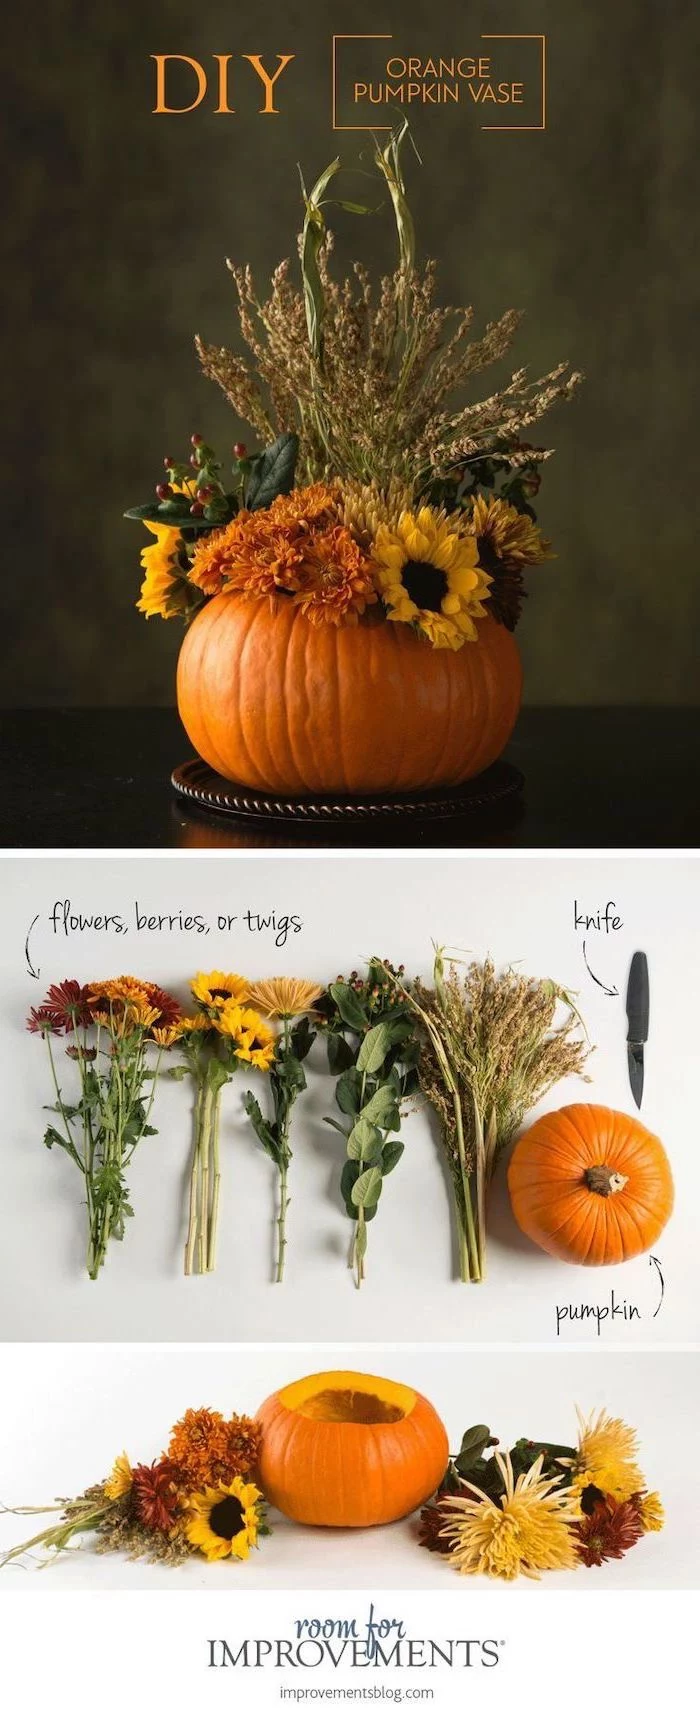 diy orange pumpkin vase, autumn decor, step by step, diy tutorial, faux flowers, photo collage